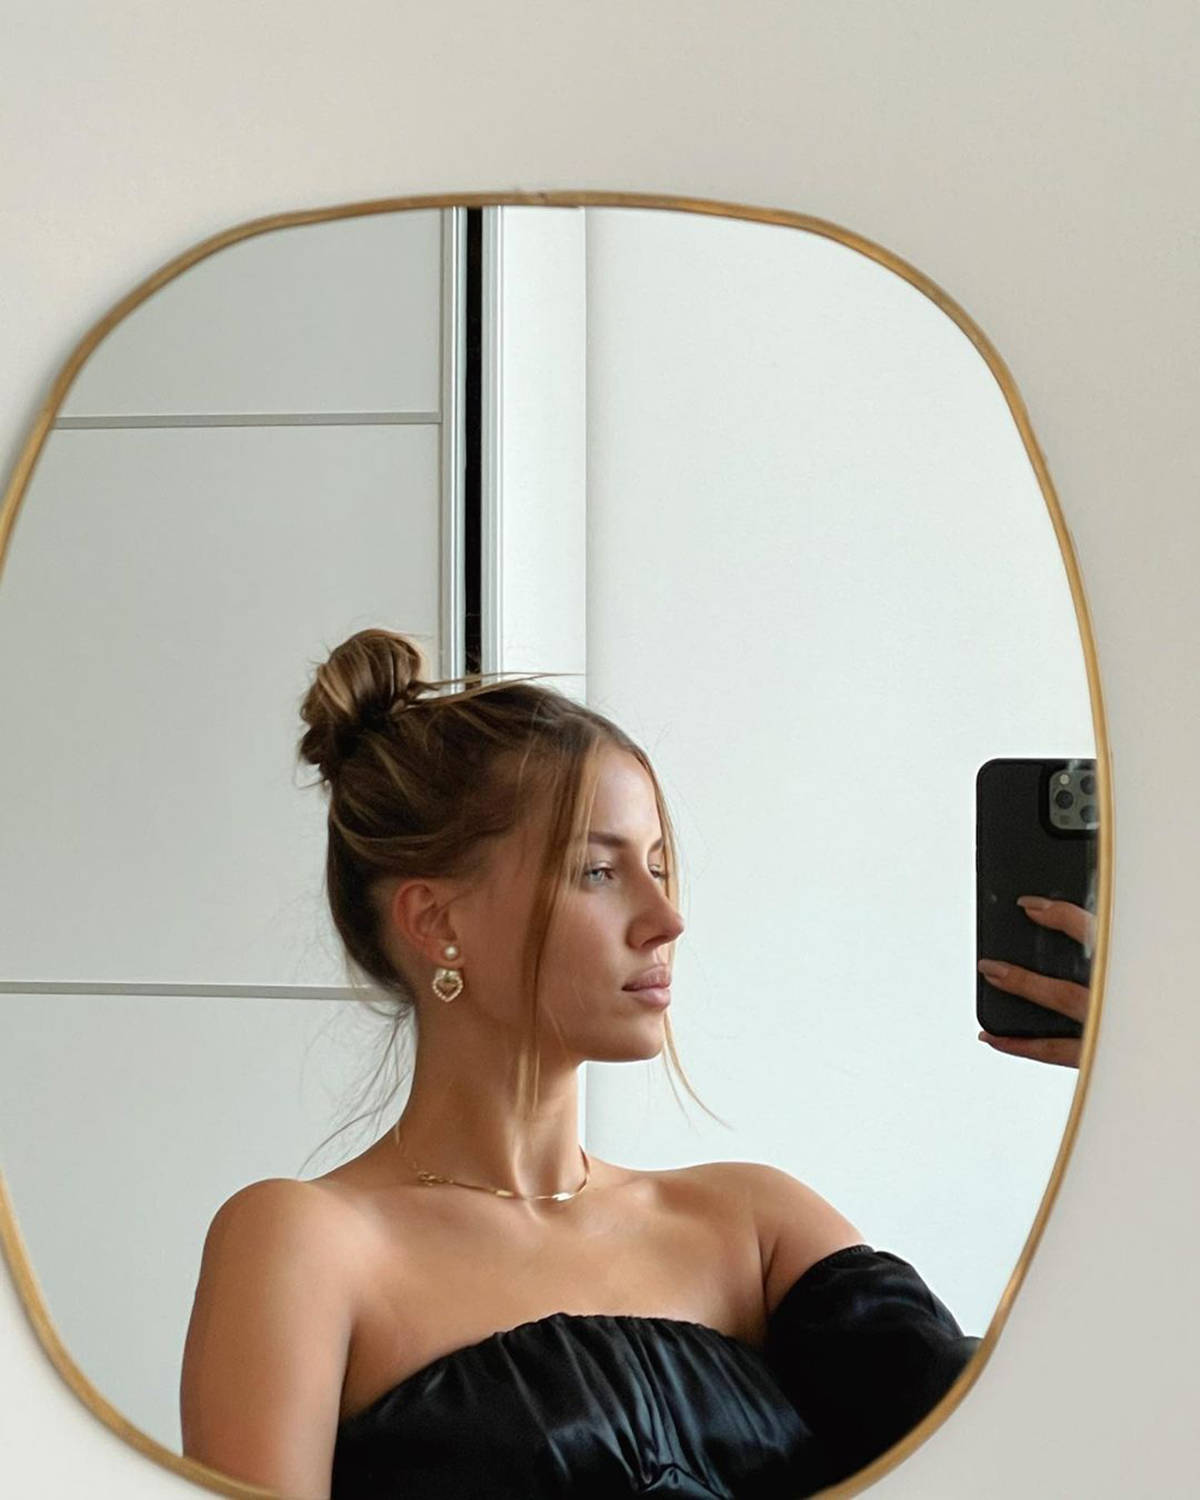 No one can ace Nicole Poturalski's mirror selfies